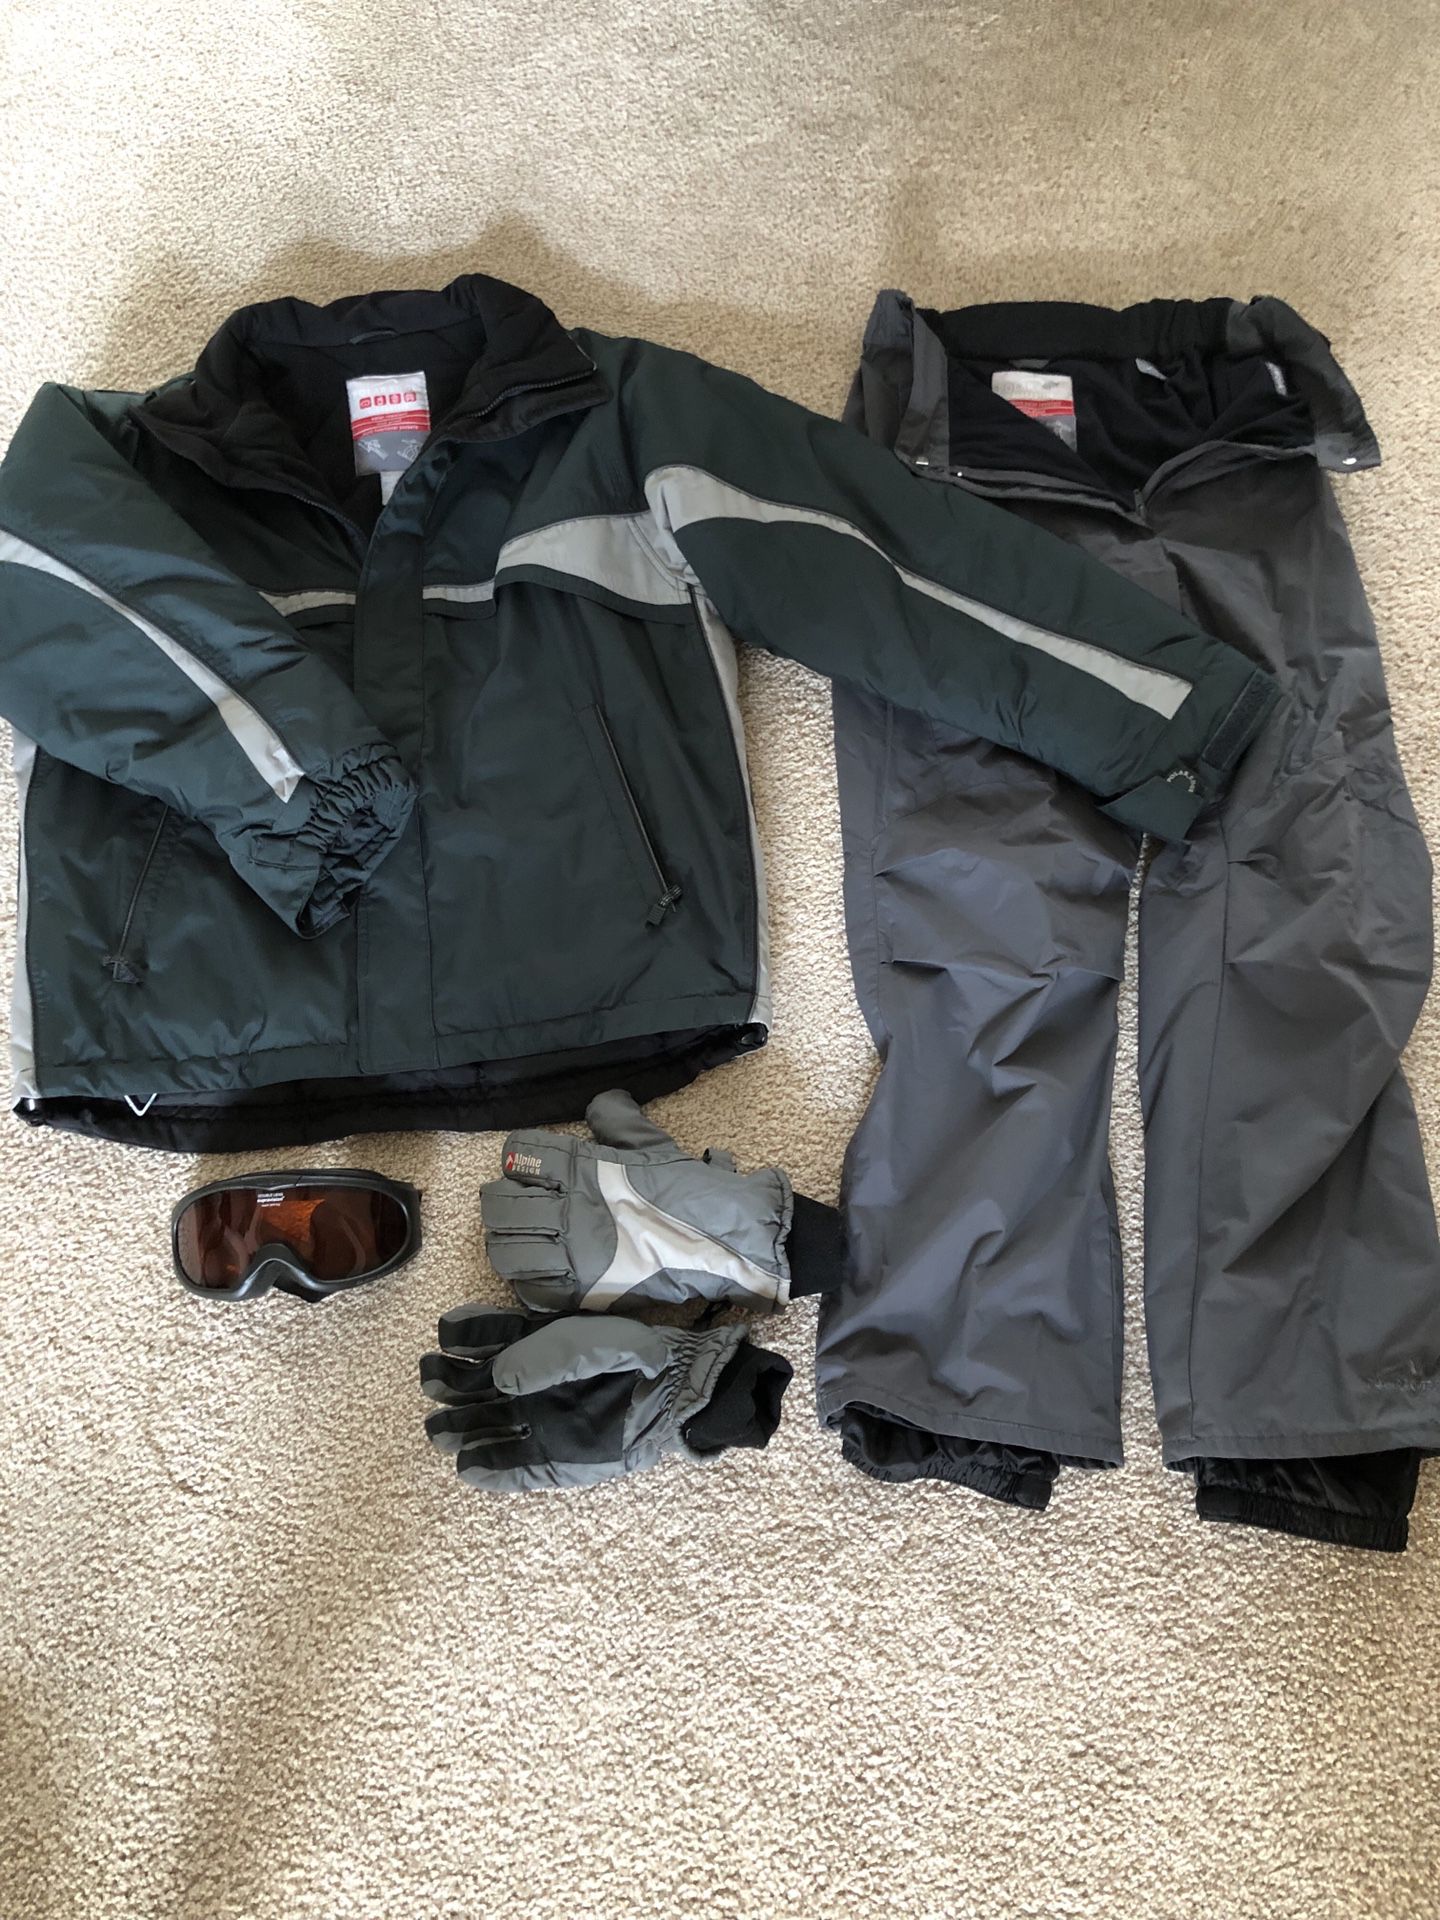 Men’s Ski Jacket and Pants, Goggles, Gloves